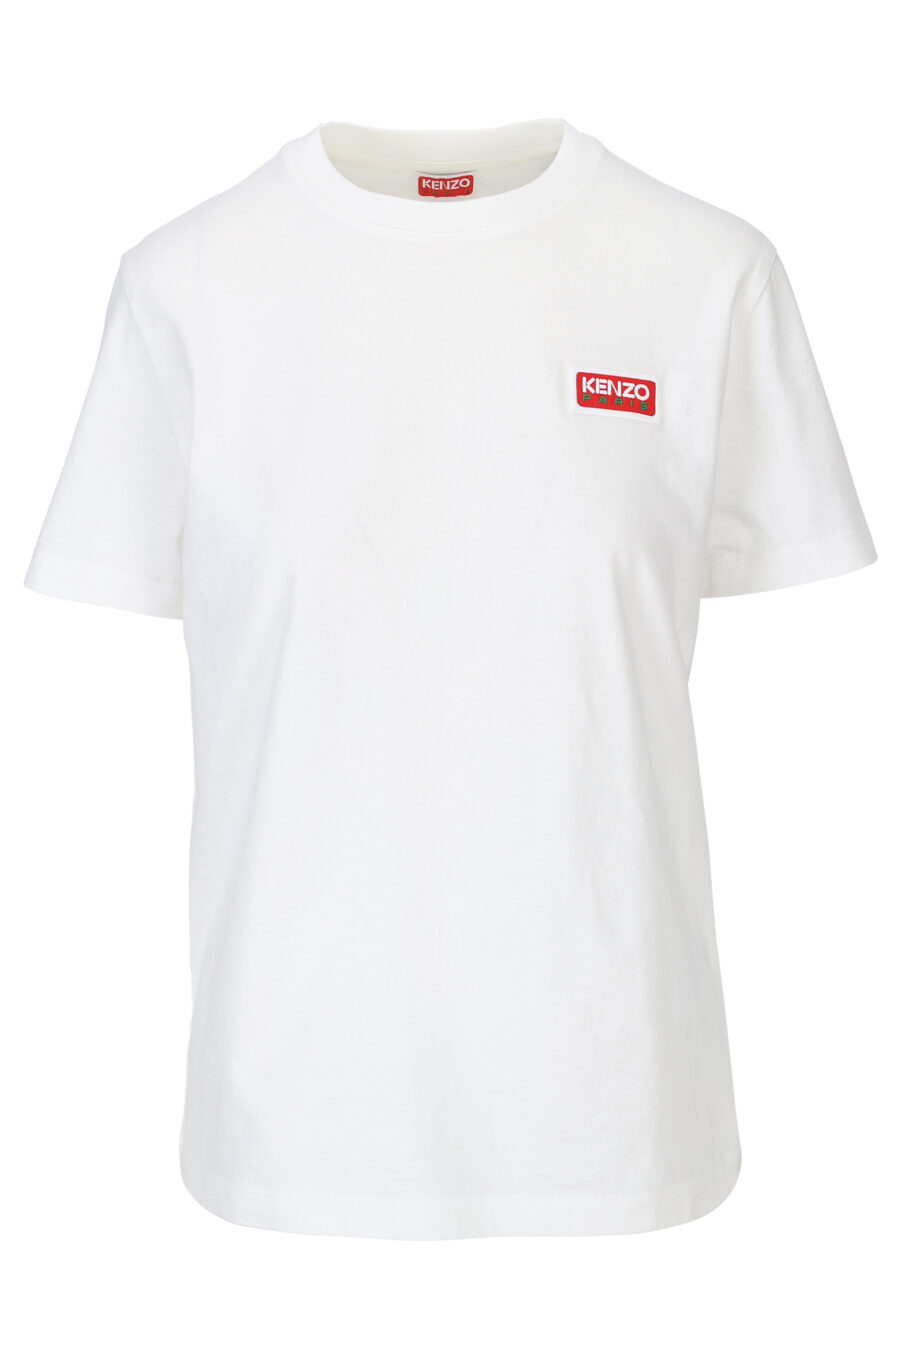 T-shirt branca oversize com logótipo "kenzo paris" - 3612230520875